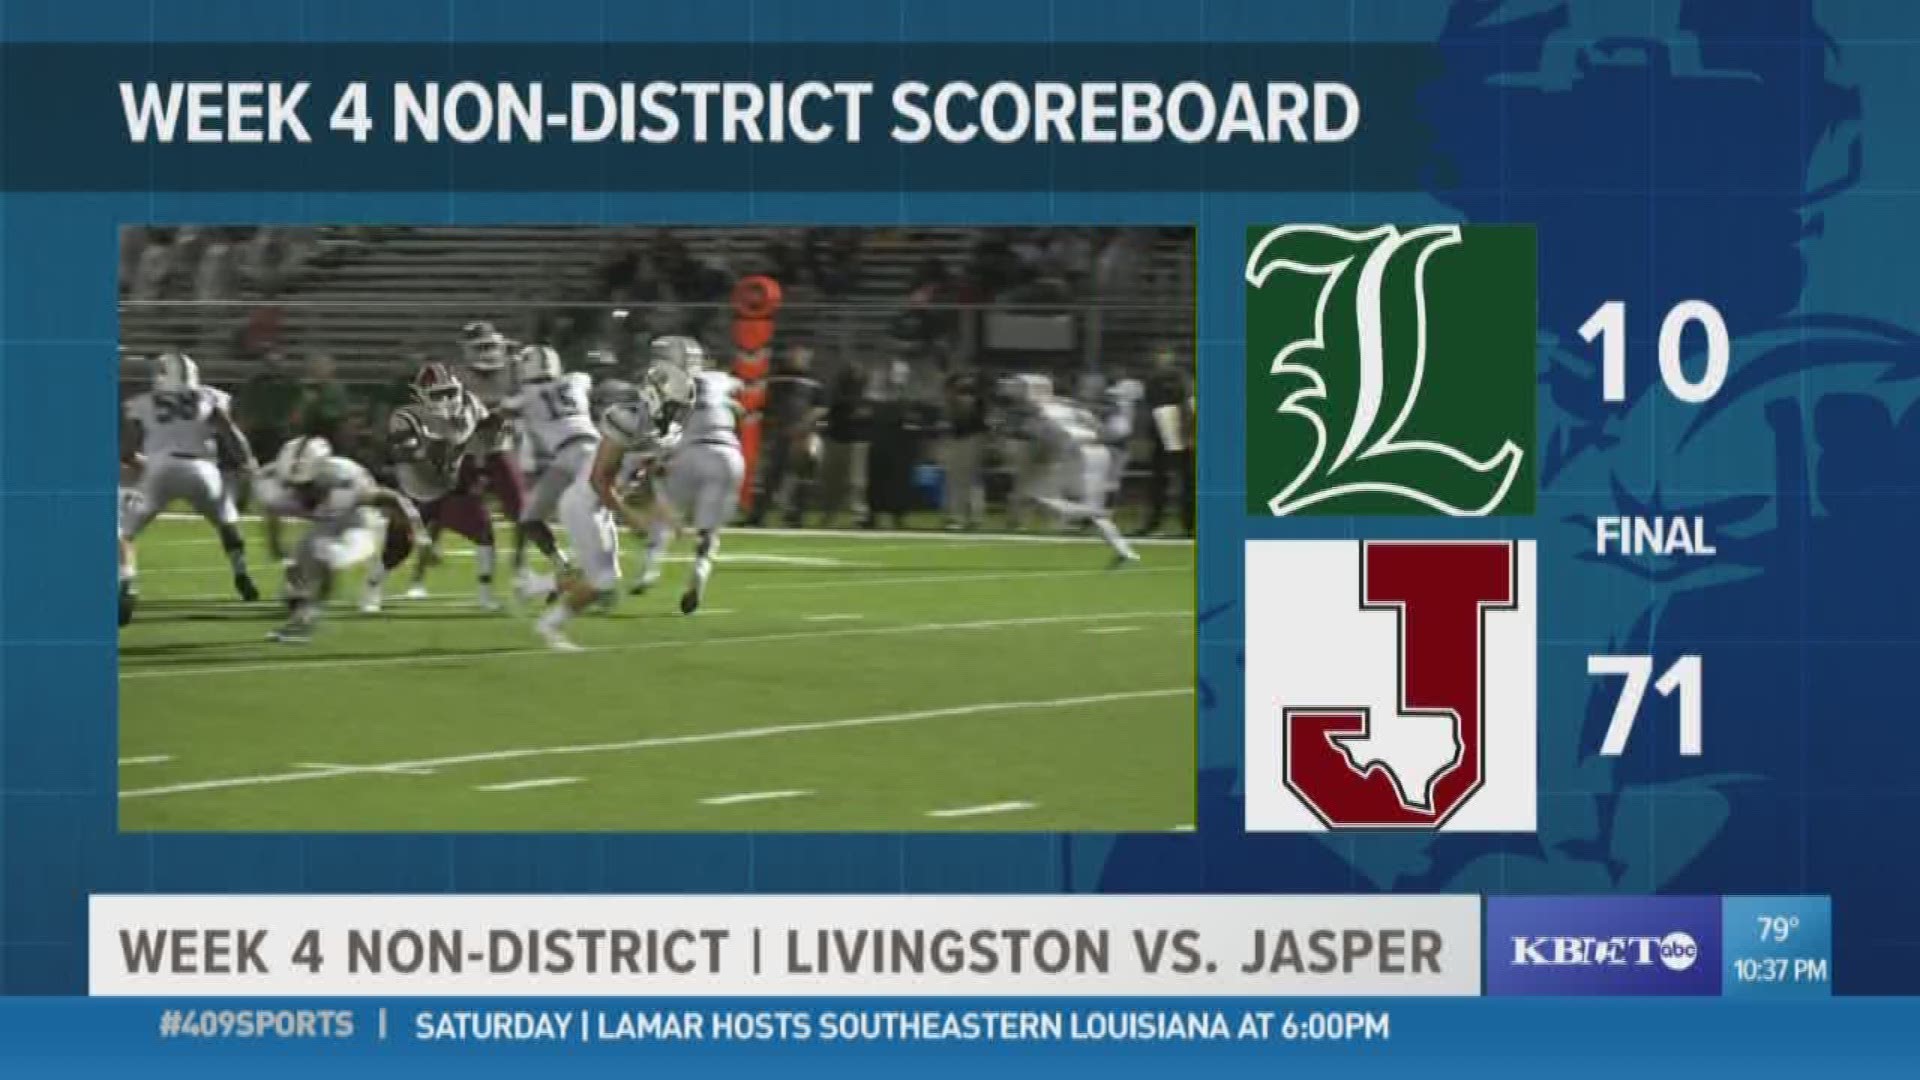 WEEK 4: Jasper High School dominates Livingston 71 -10 